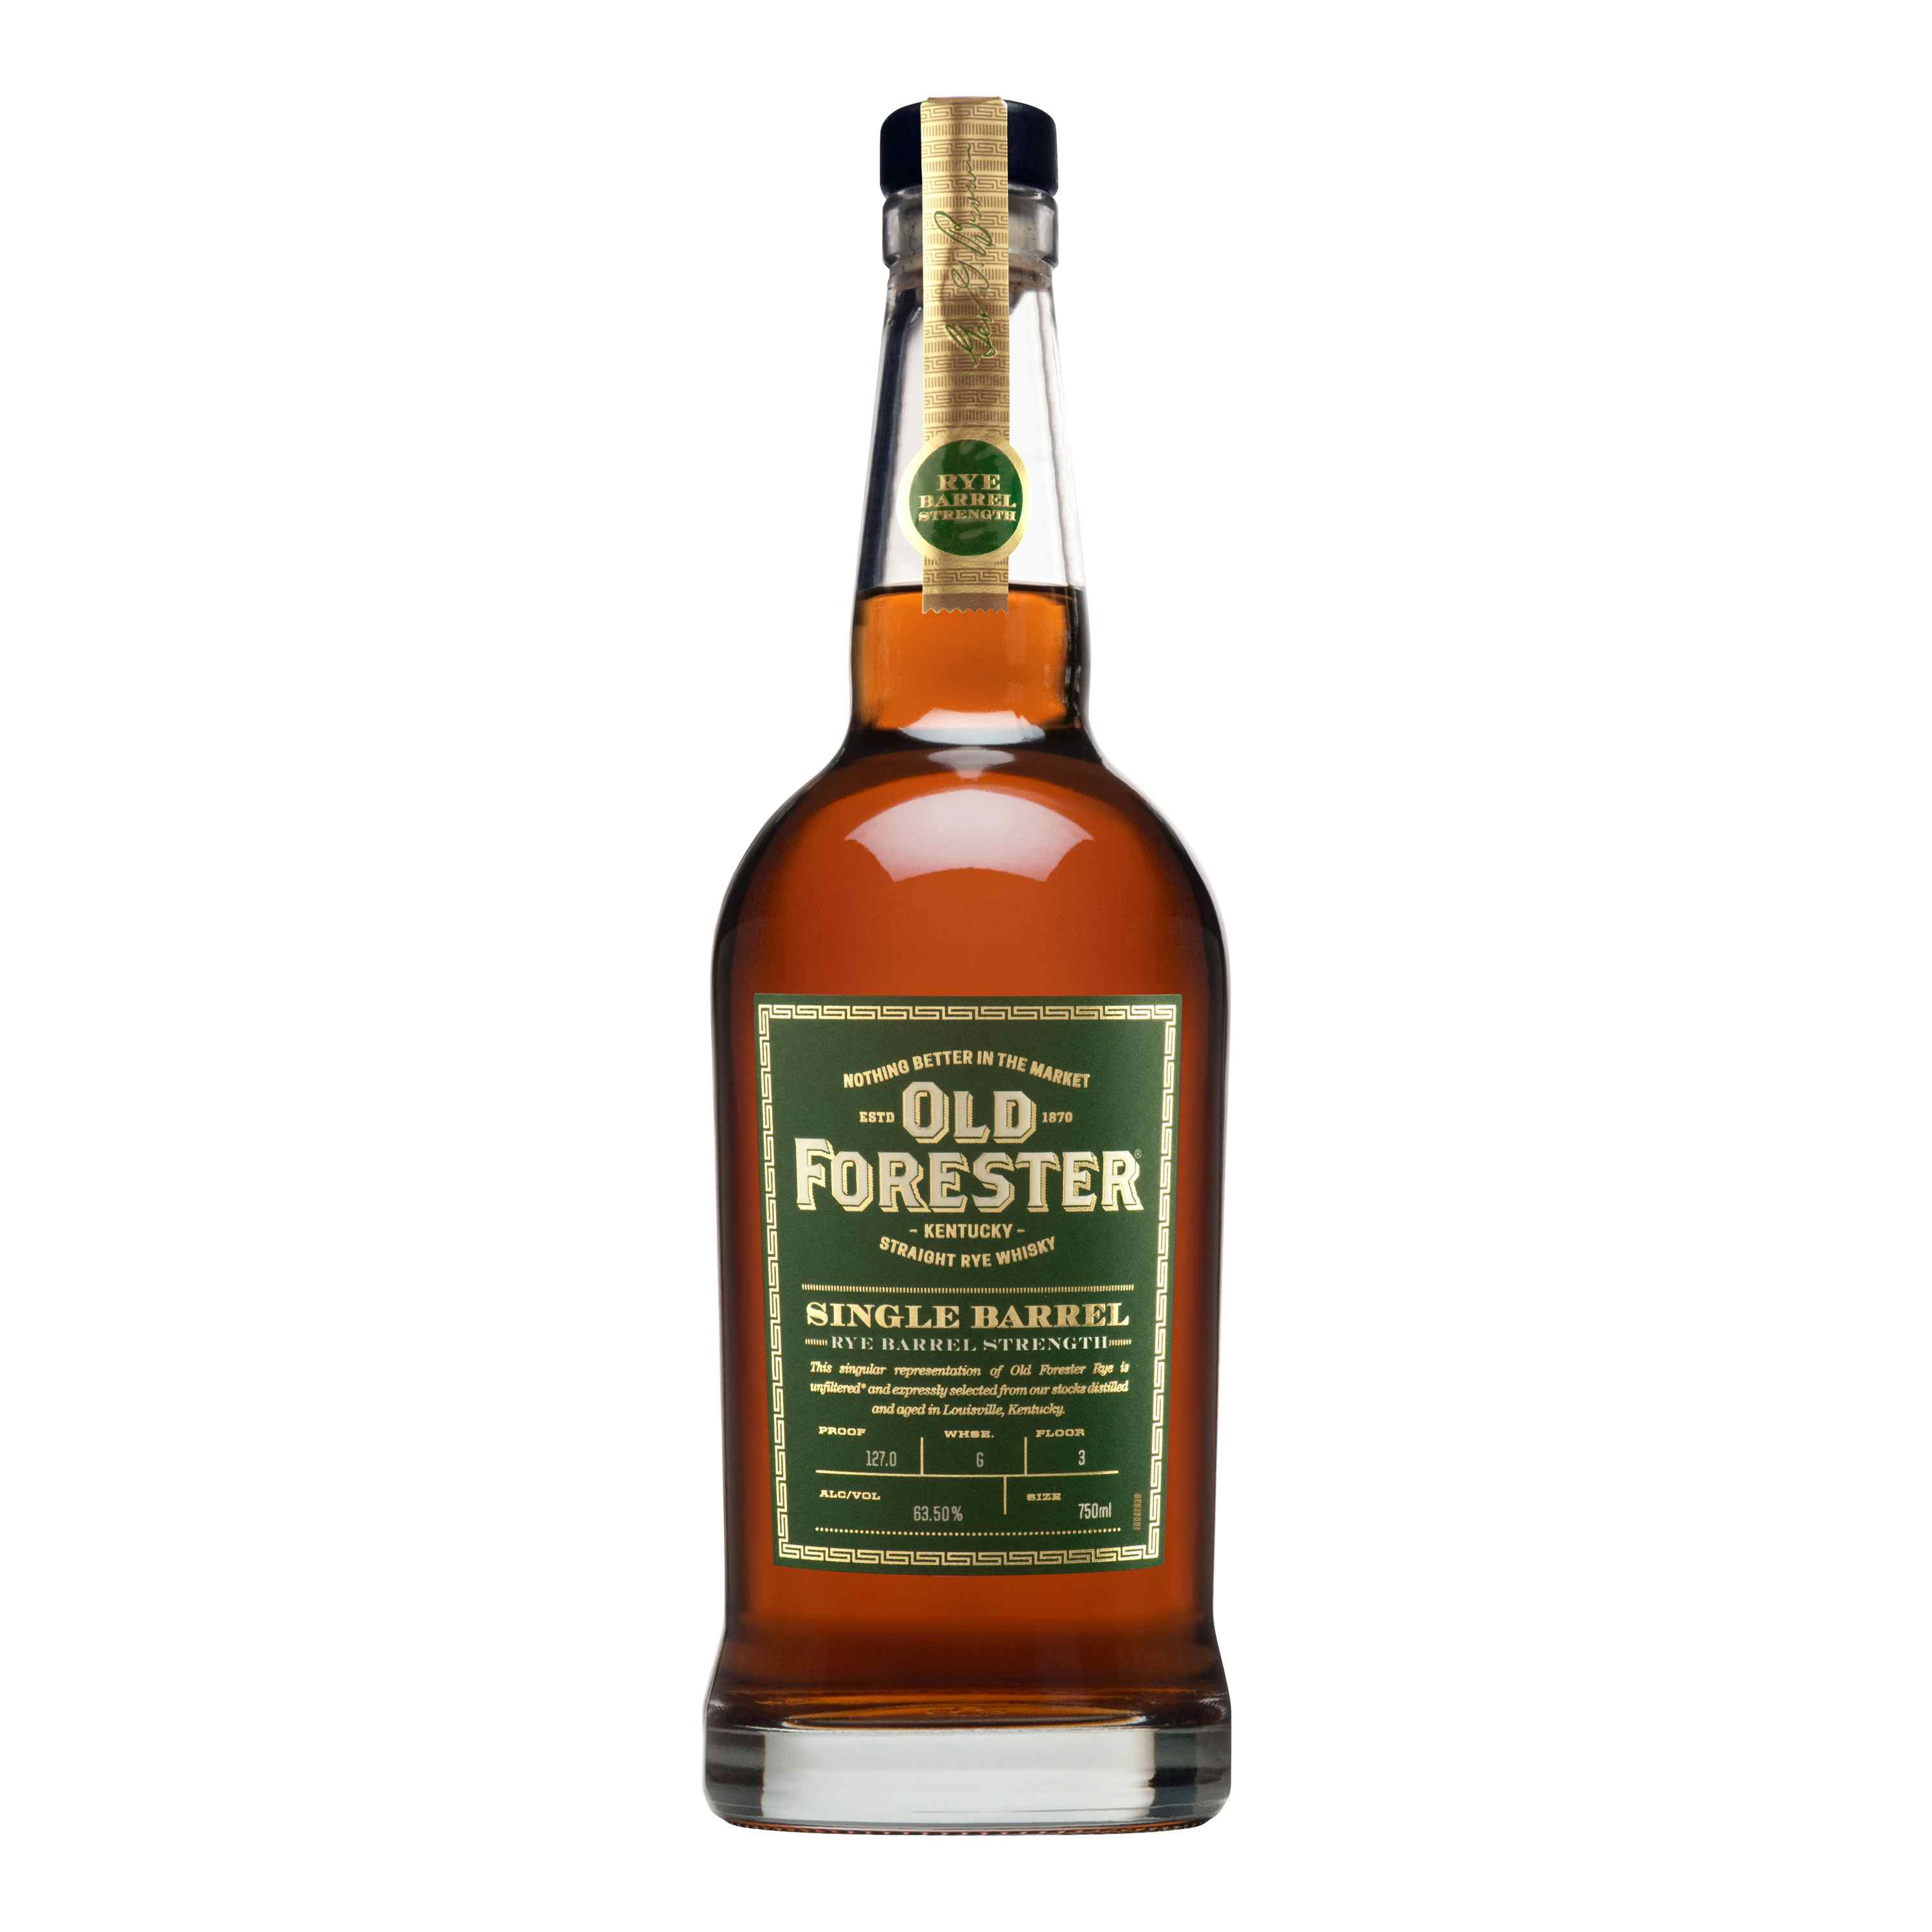 Old Forester Single Barrel Rye Whiskey